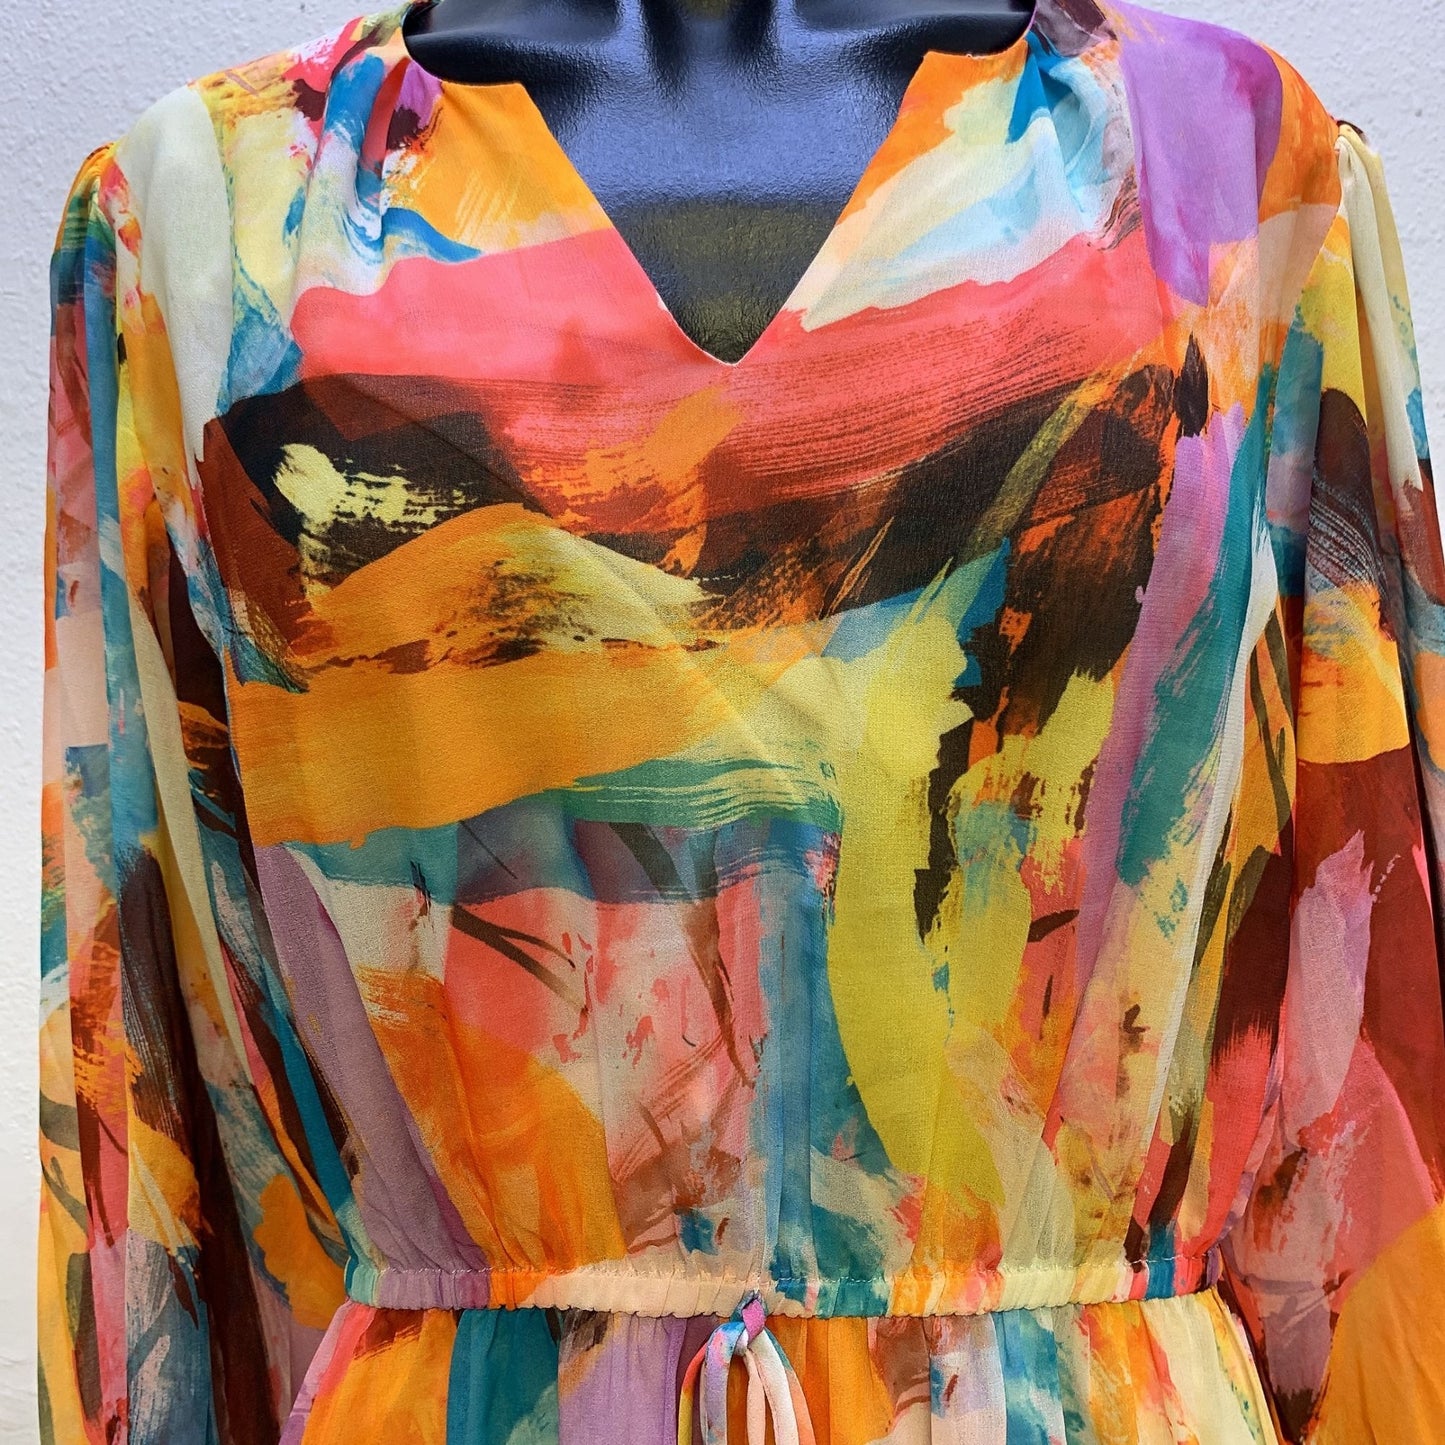 Willa Story Multi-colored Print Dress Size Medium